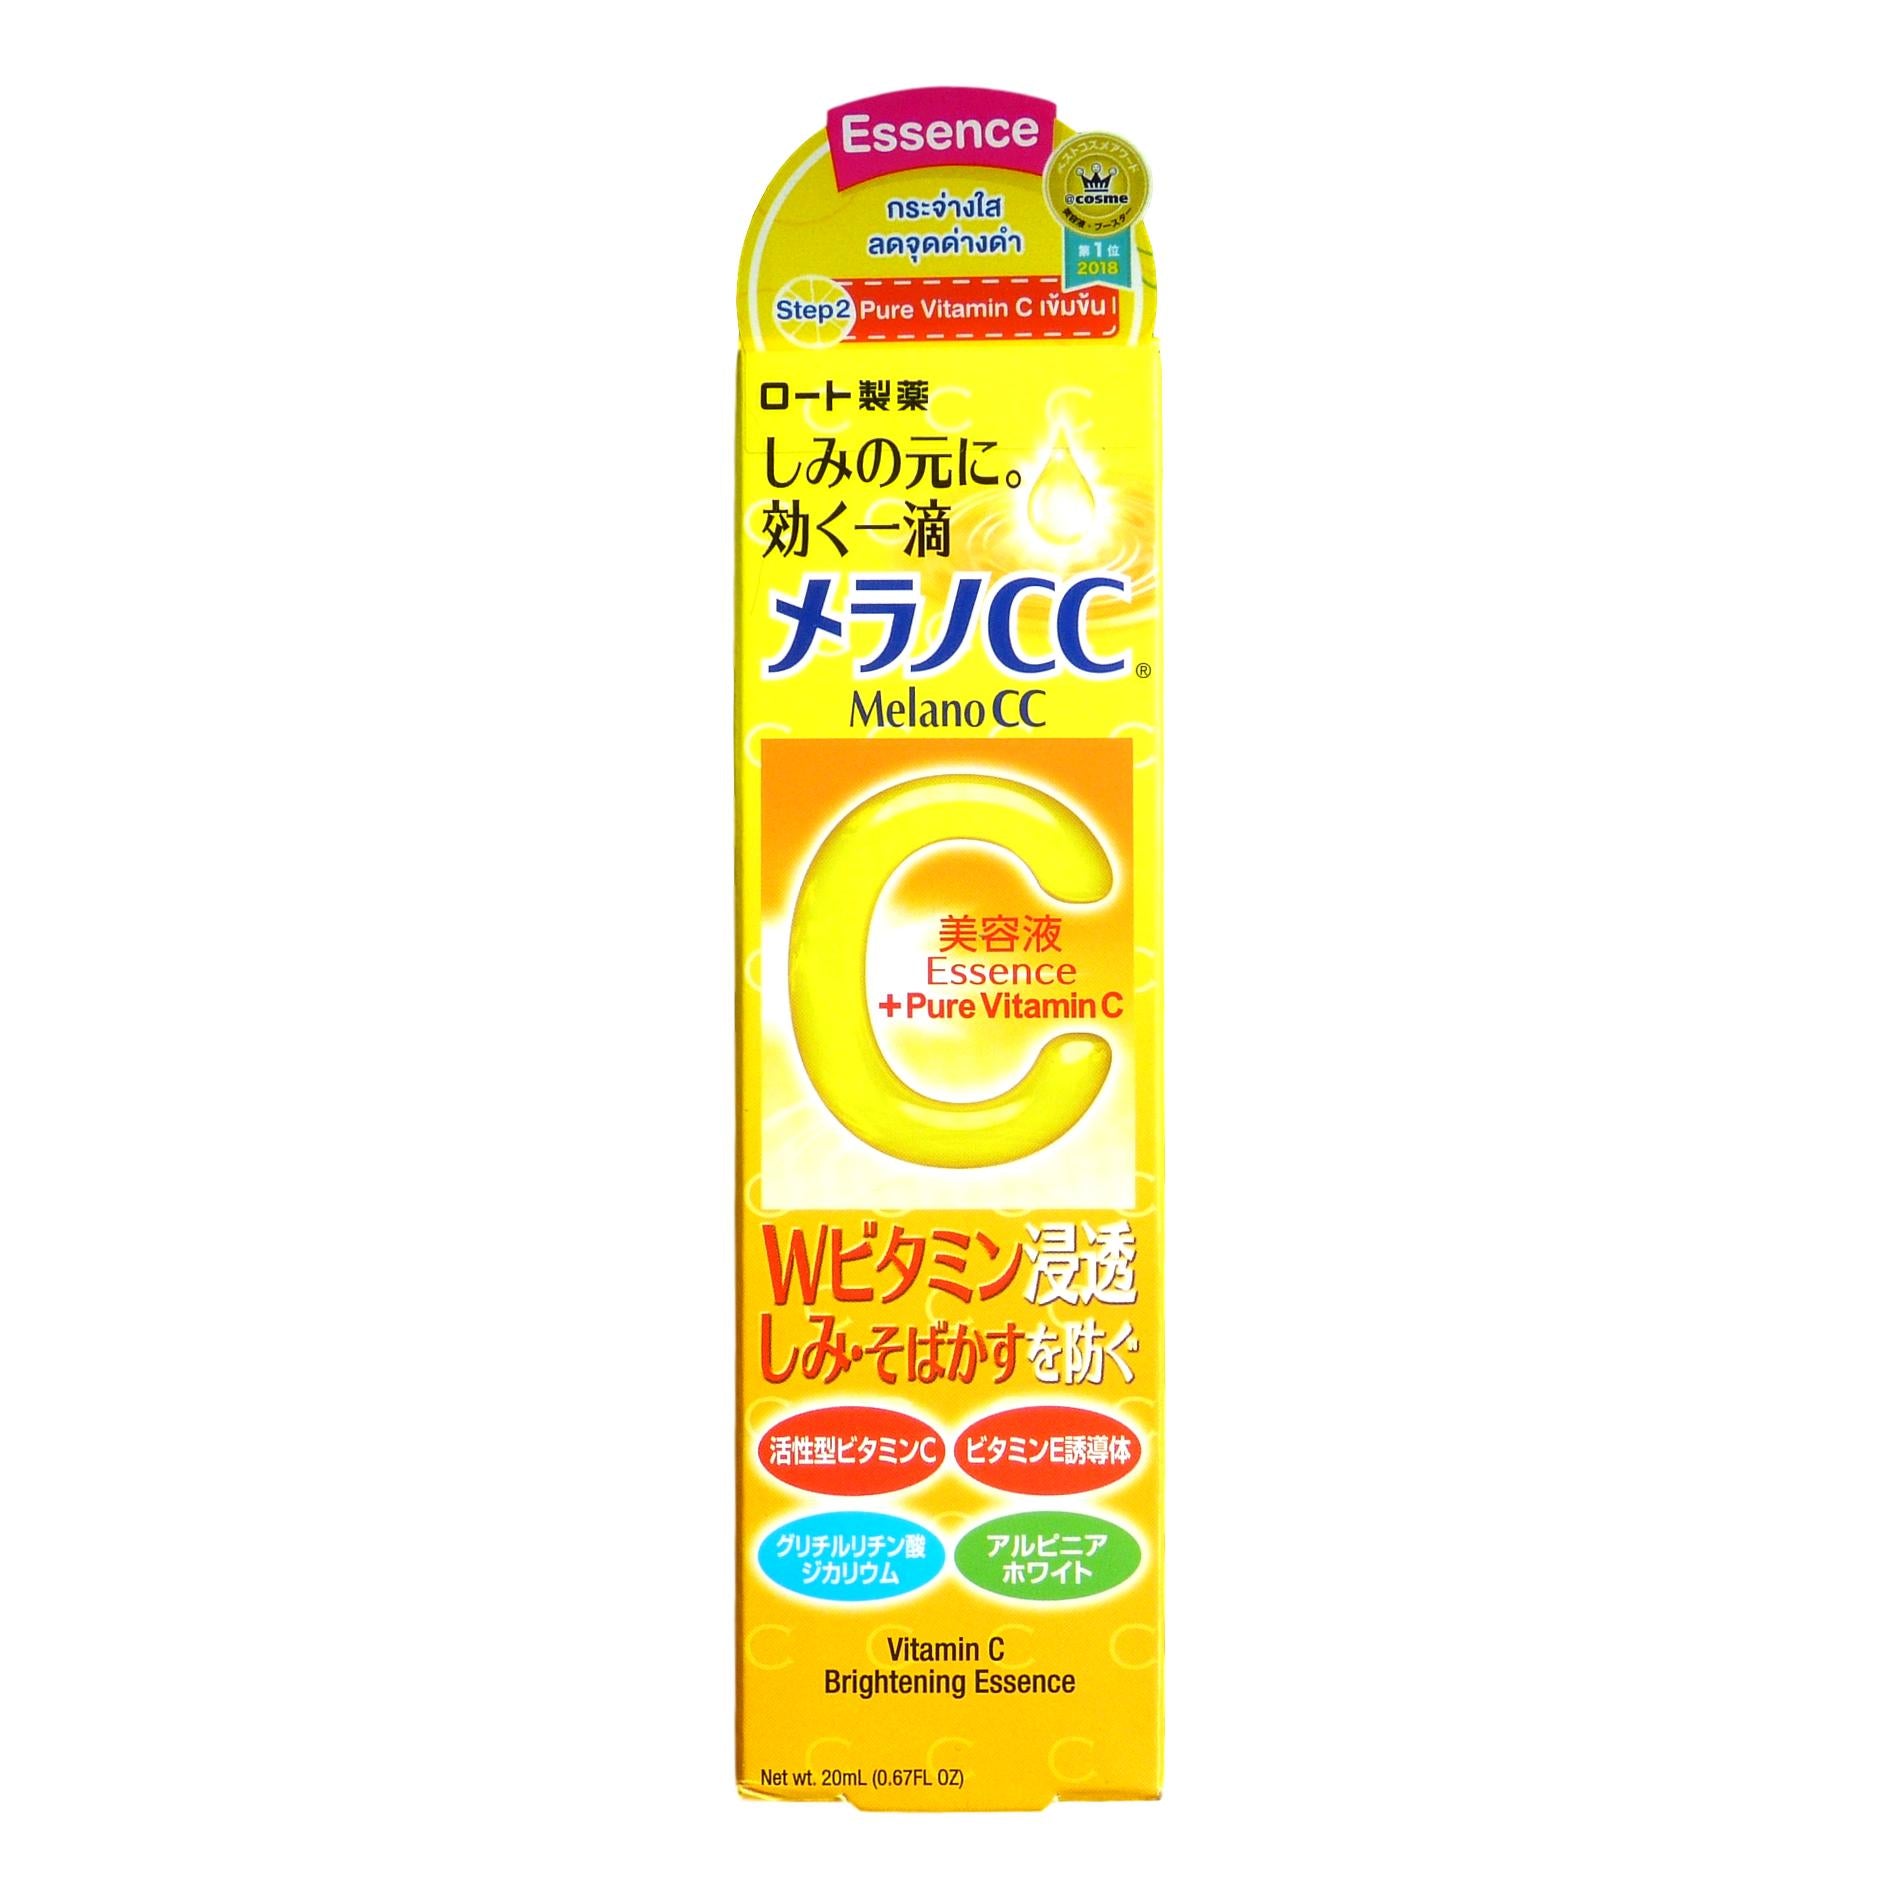 Rohto Melano CC Intensive Anti-spot Essence 20ml (Thailand Version) - Asian Beauty Supply